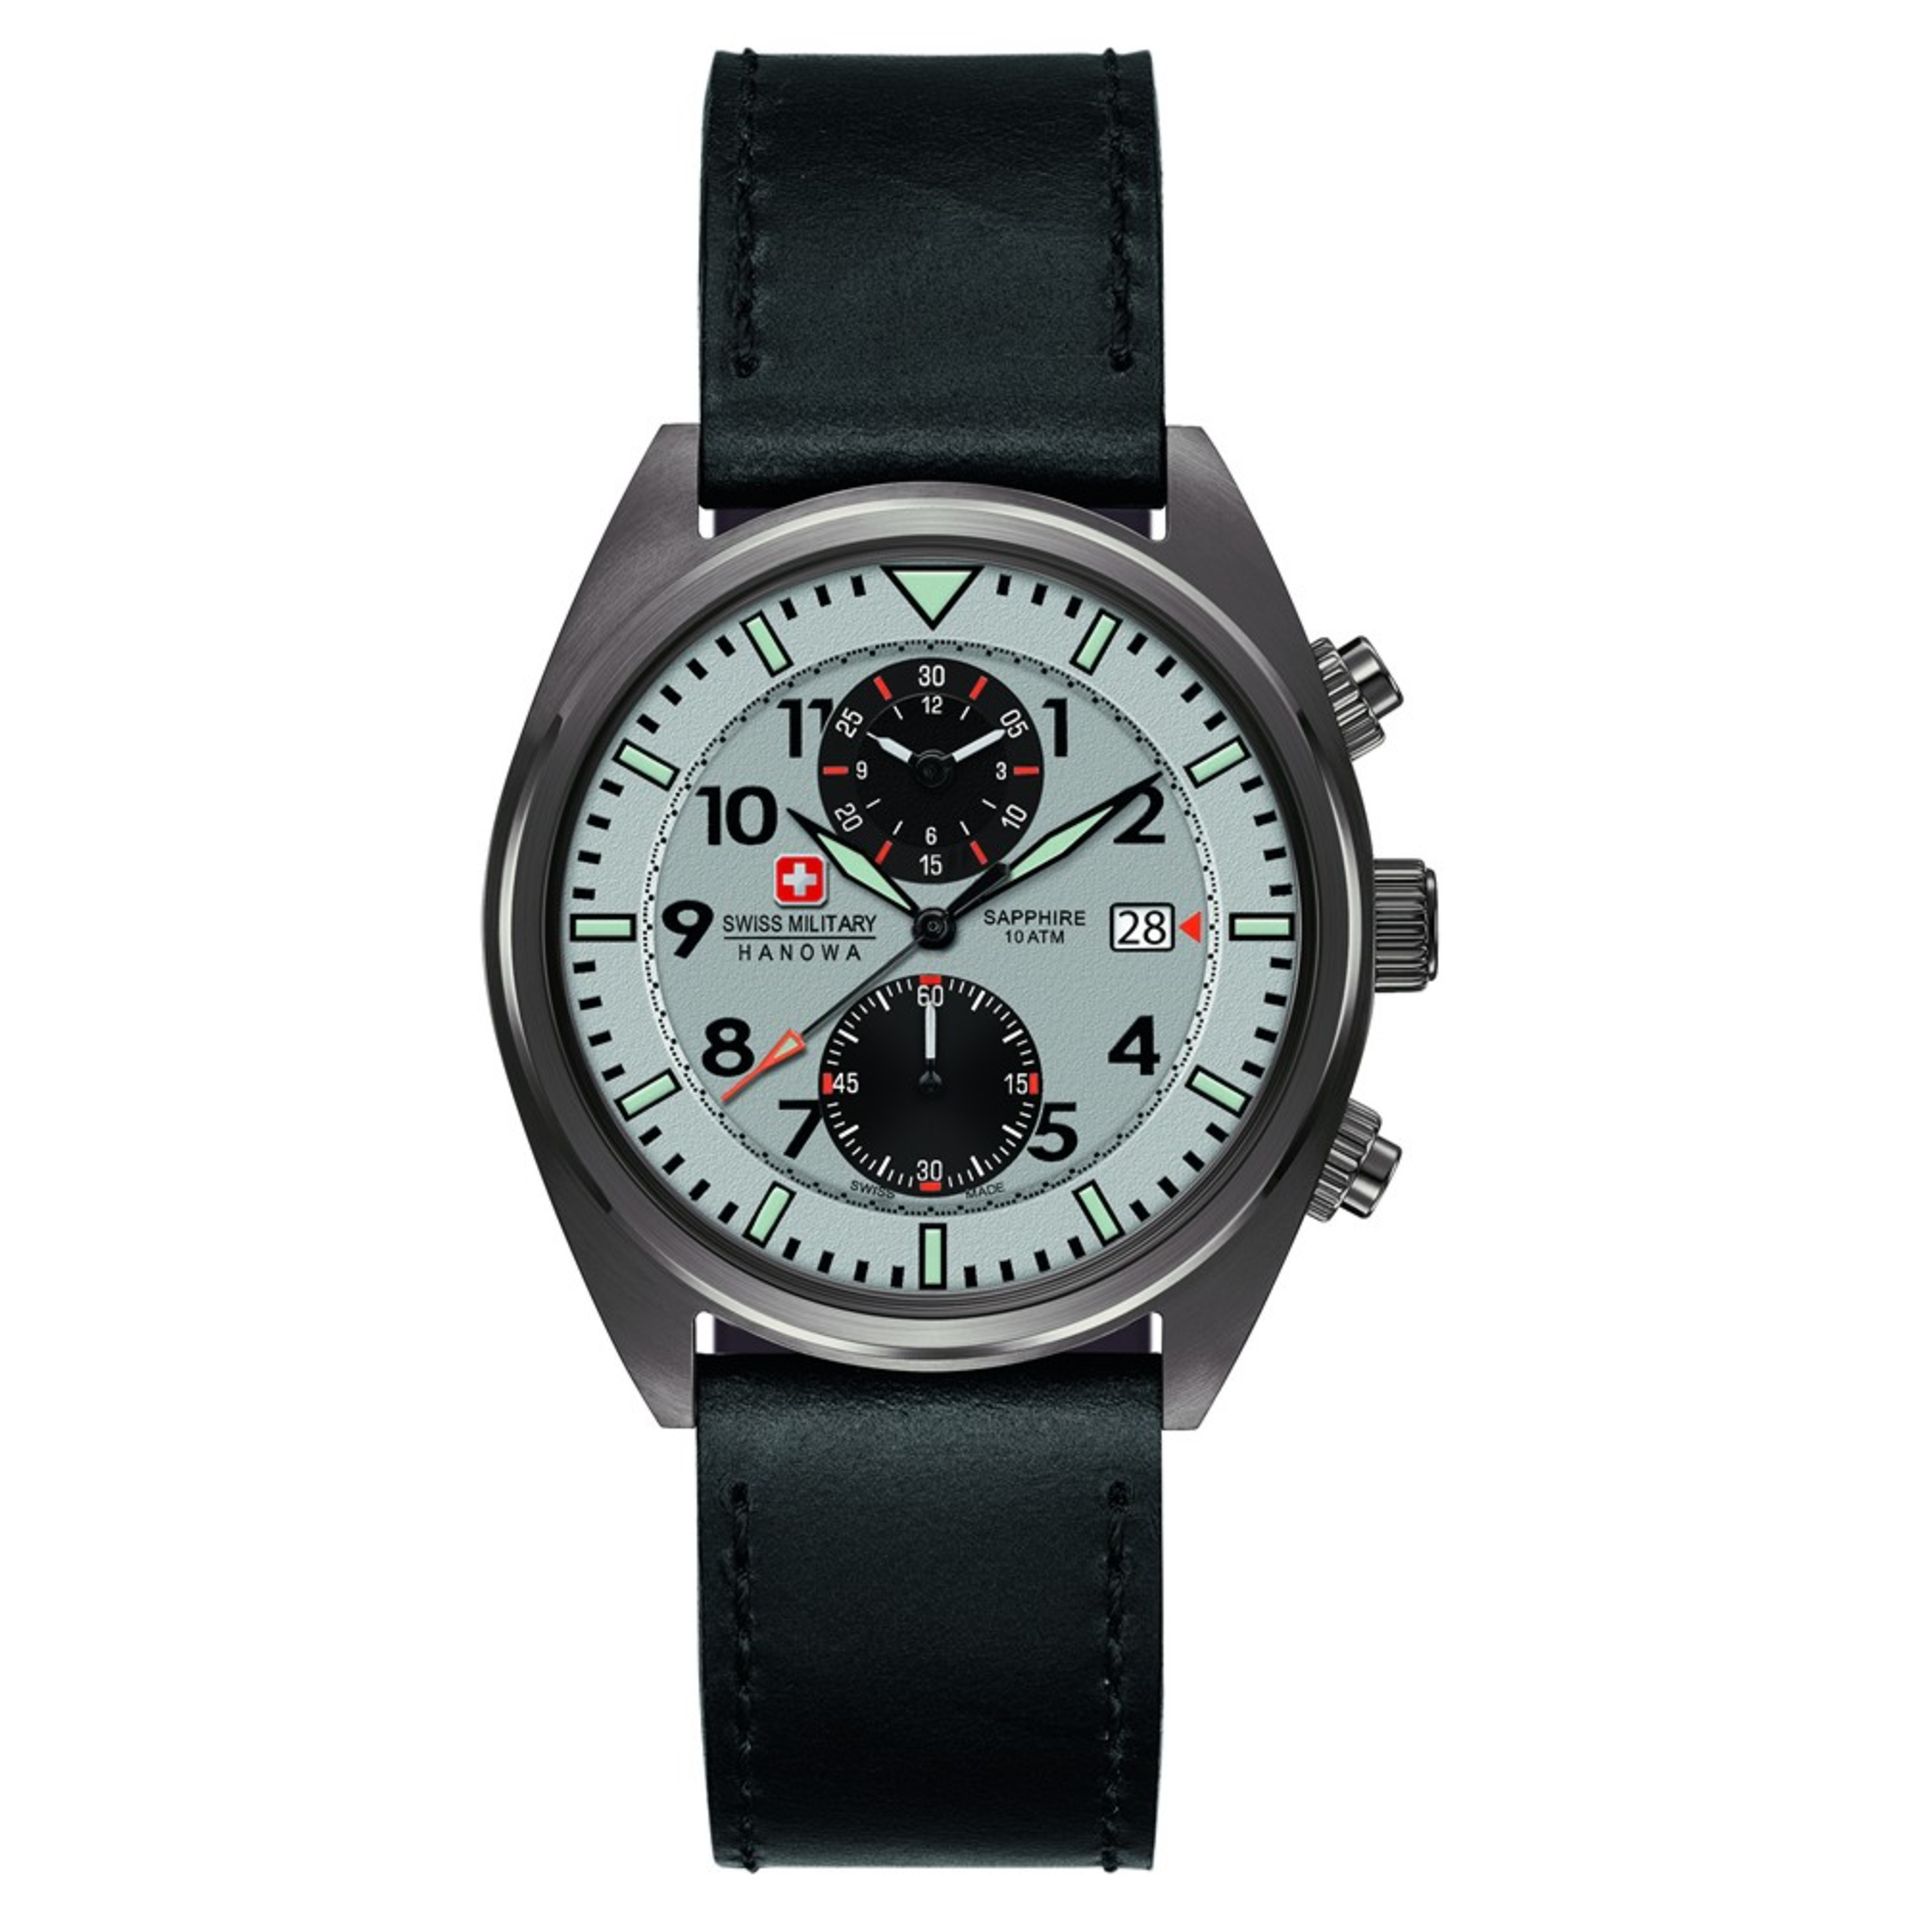 Boxed Brand New, Swiss Military Watch 6-4227.30.009, RRP-£258.00 (DA)